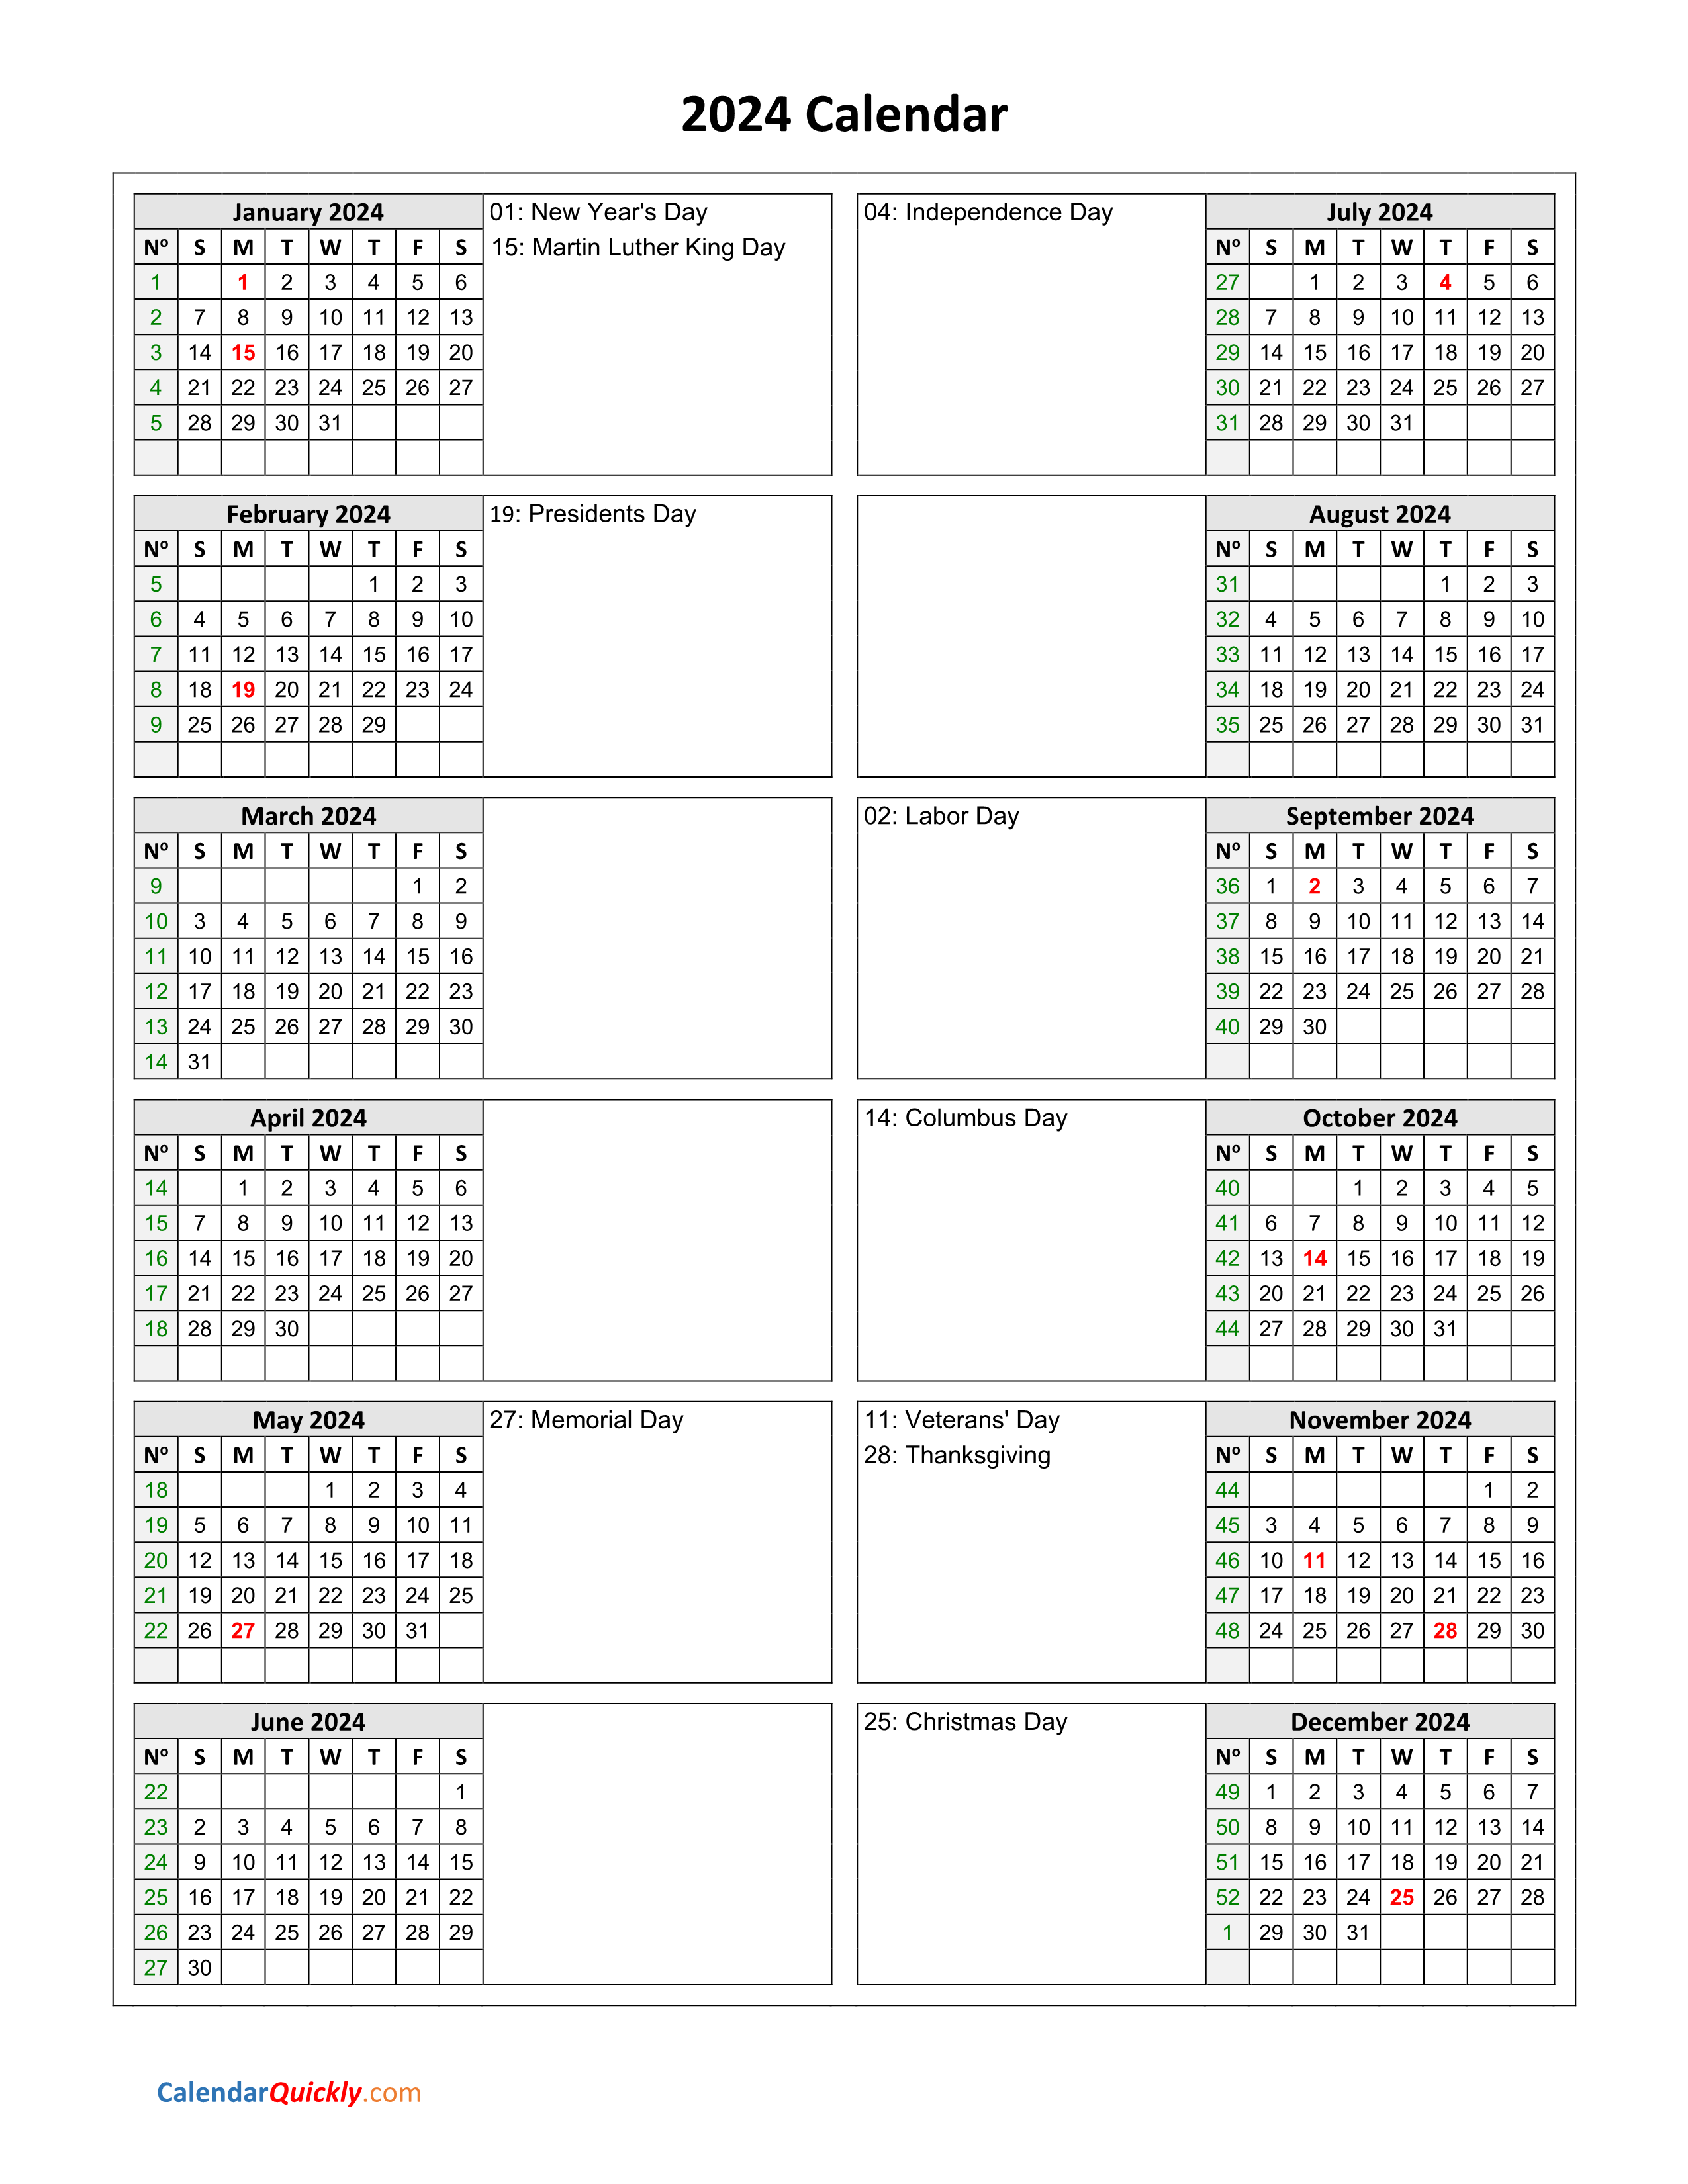 Printable Calendars 2024 Pdf Calendar 2024 With Federal Holidays - Free Printable 2024 Calendar With Holidays One Page